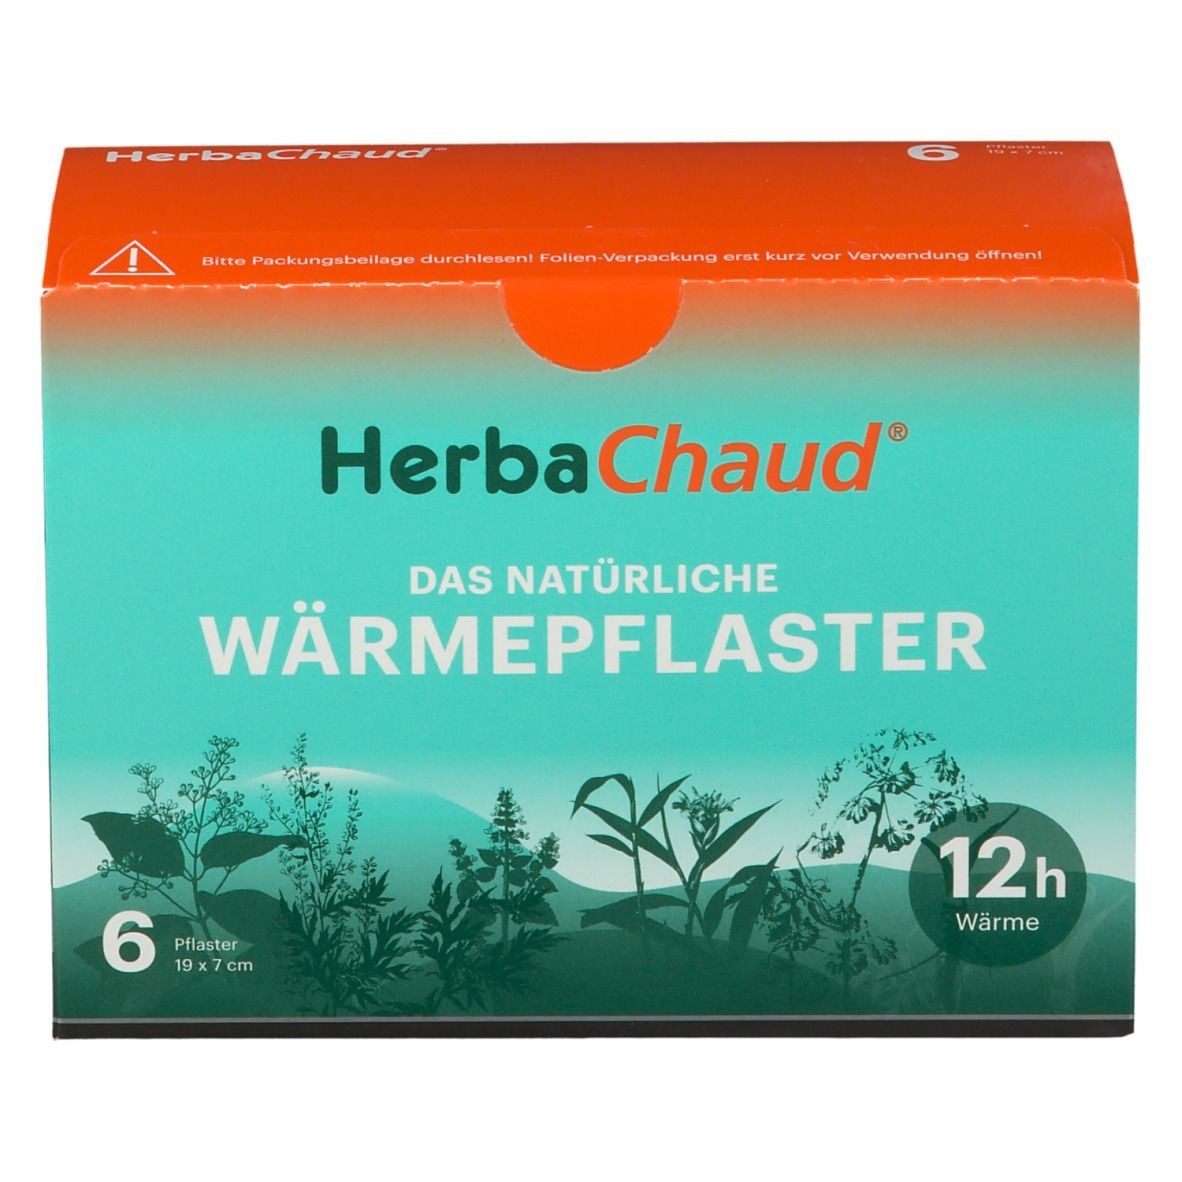 HerbaChaud® Wärmepflaster 19 x 7 cm